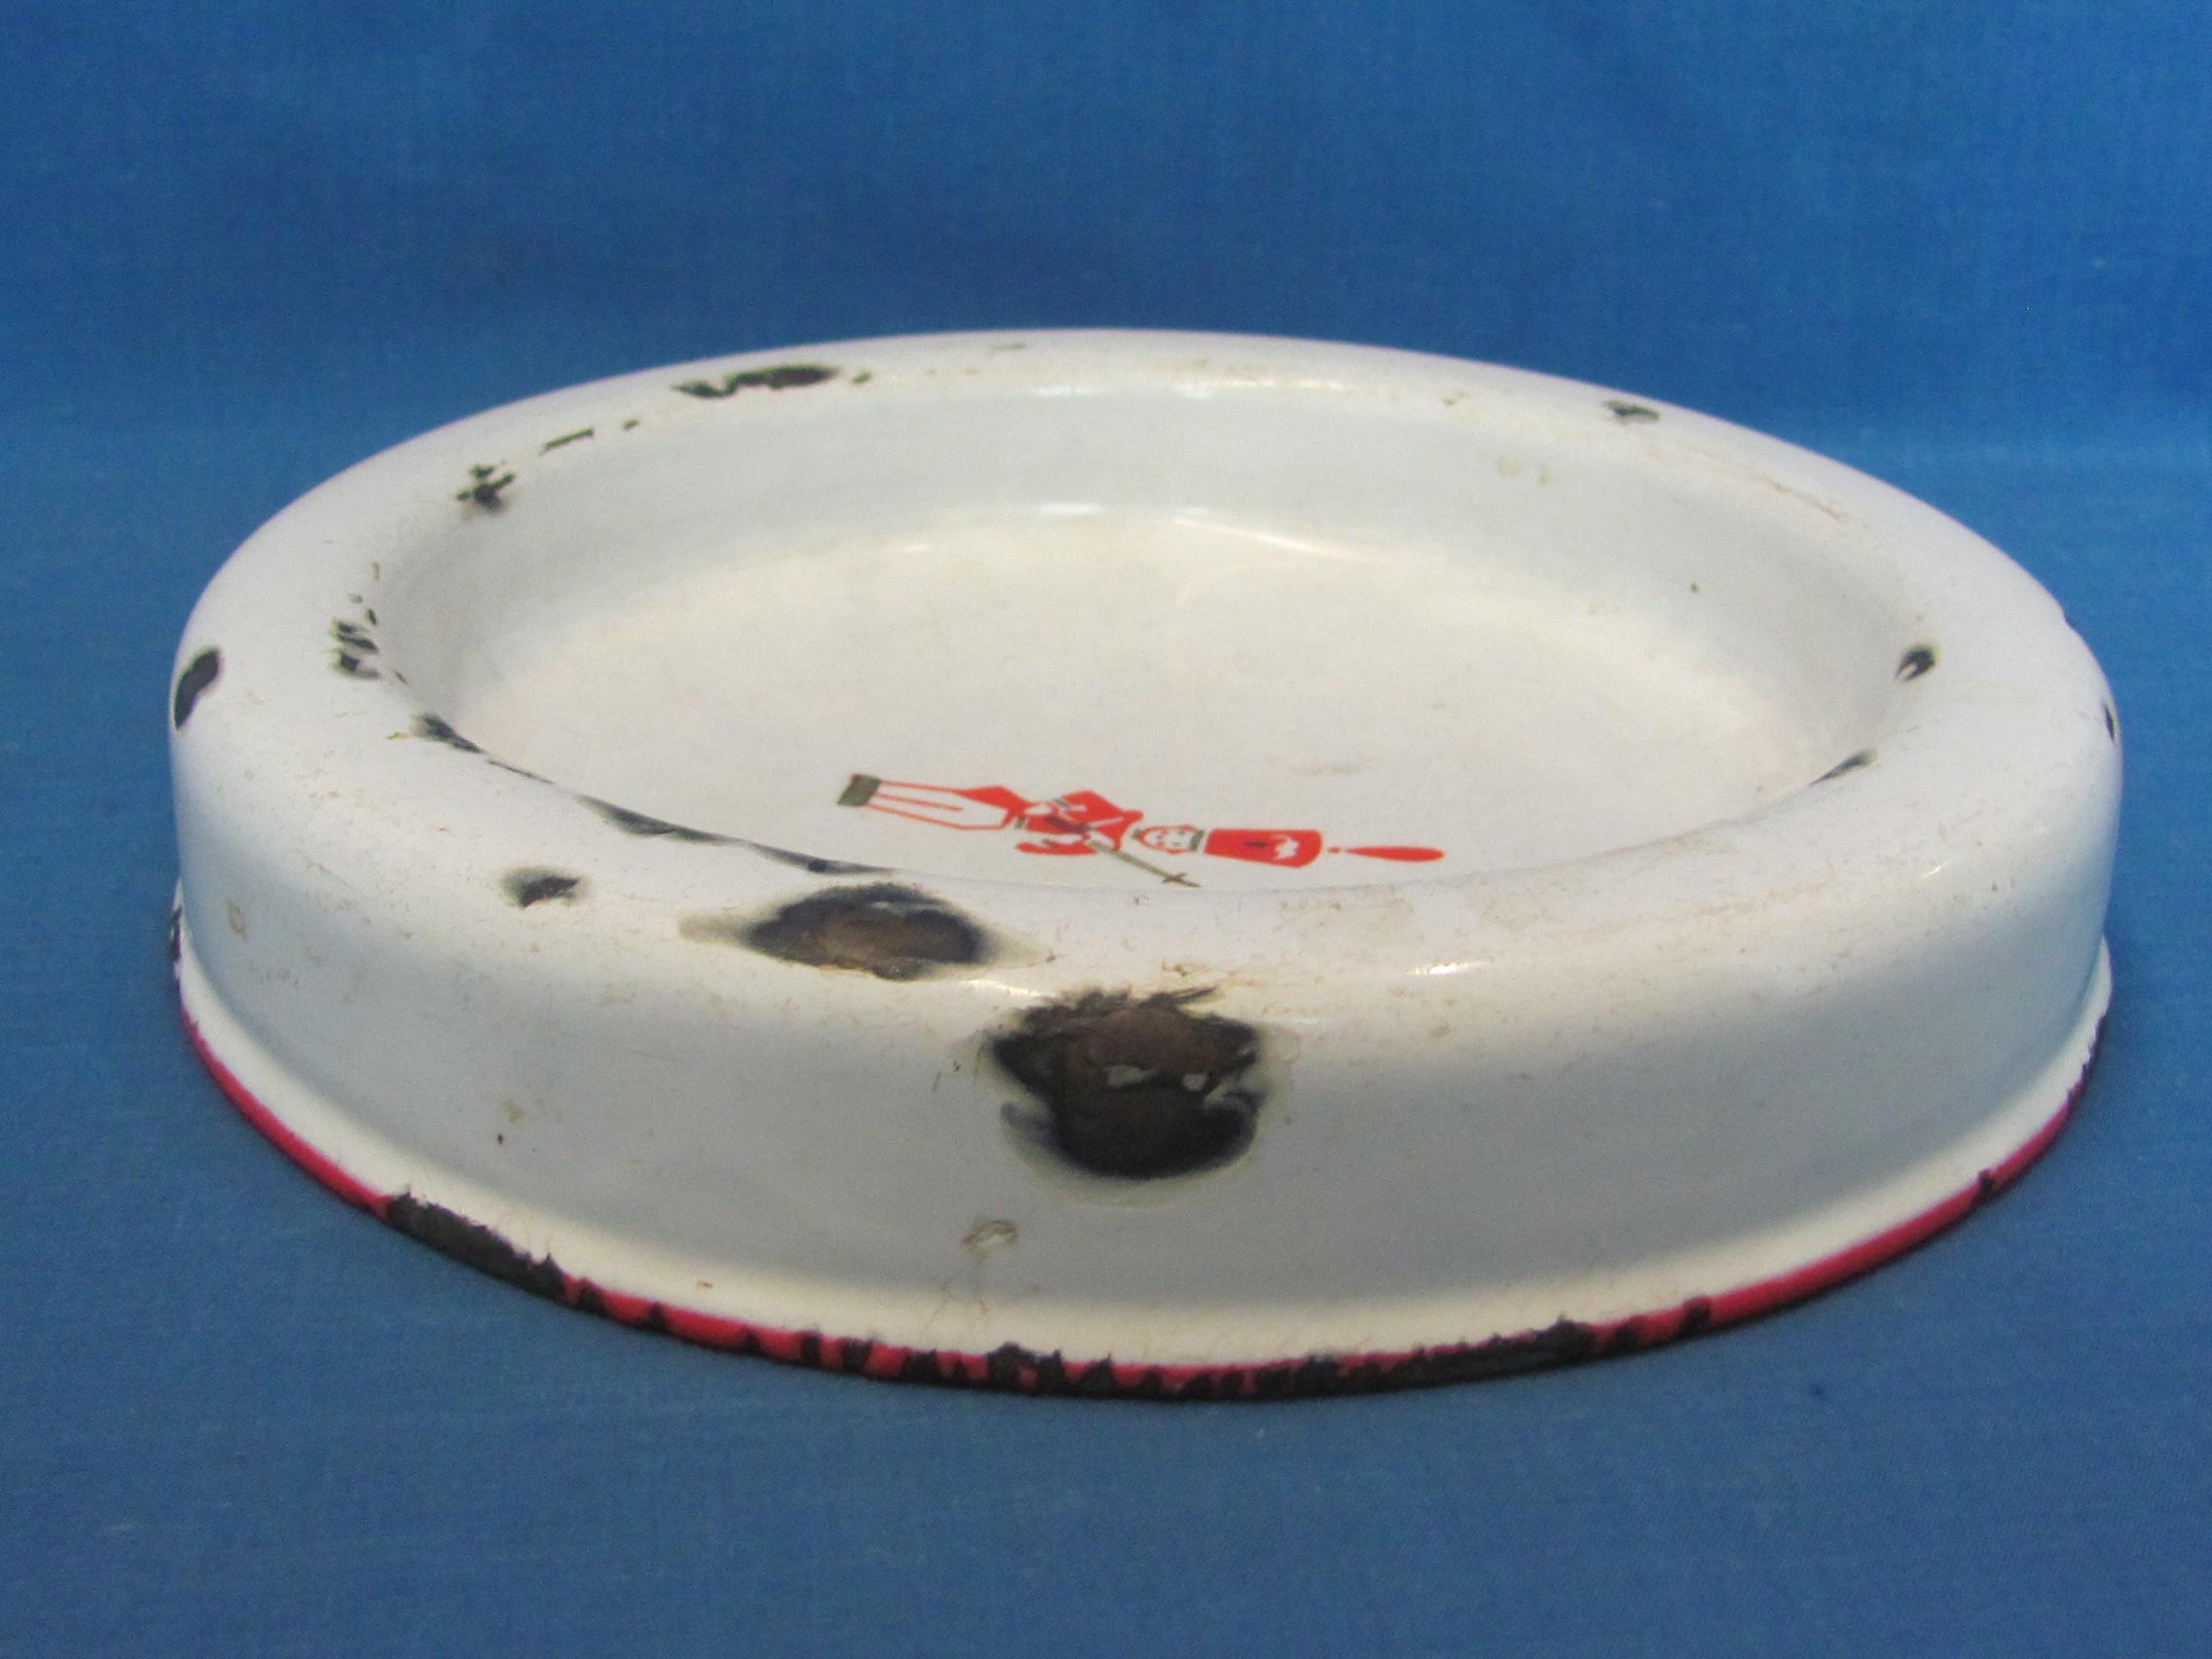 Vintage Enamel Dish – Toy Soldier in Center – Made in Sweden – 7” in diameter